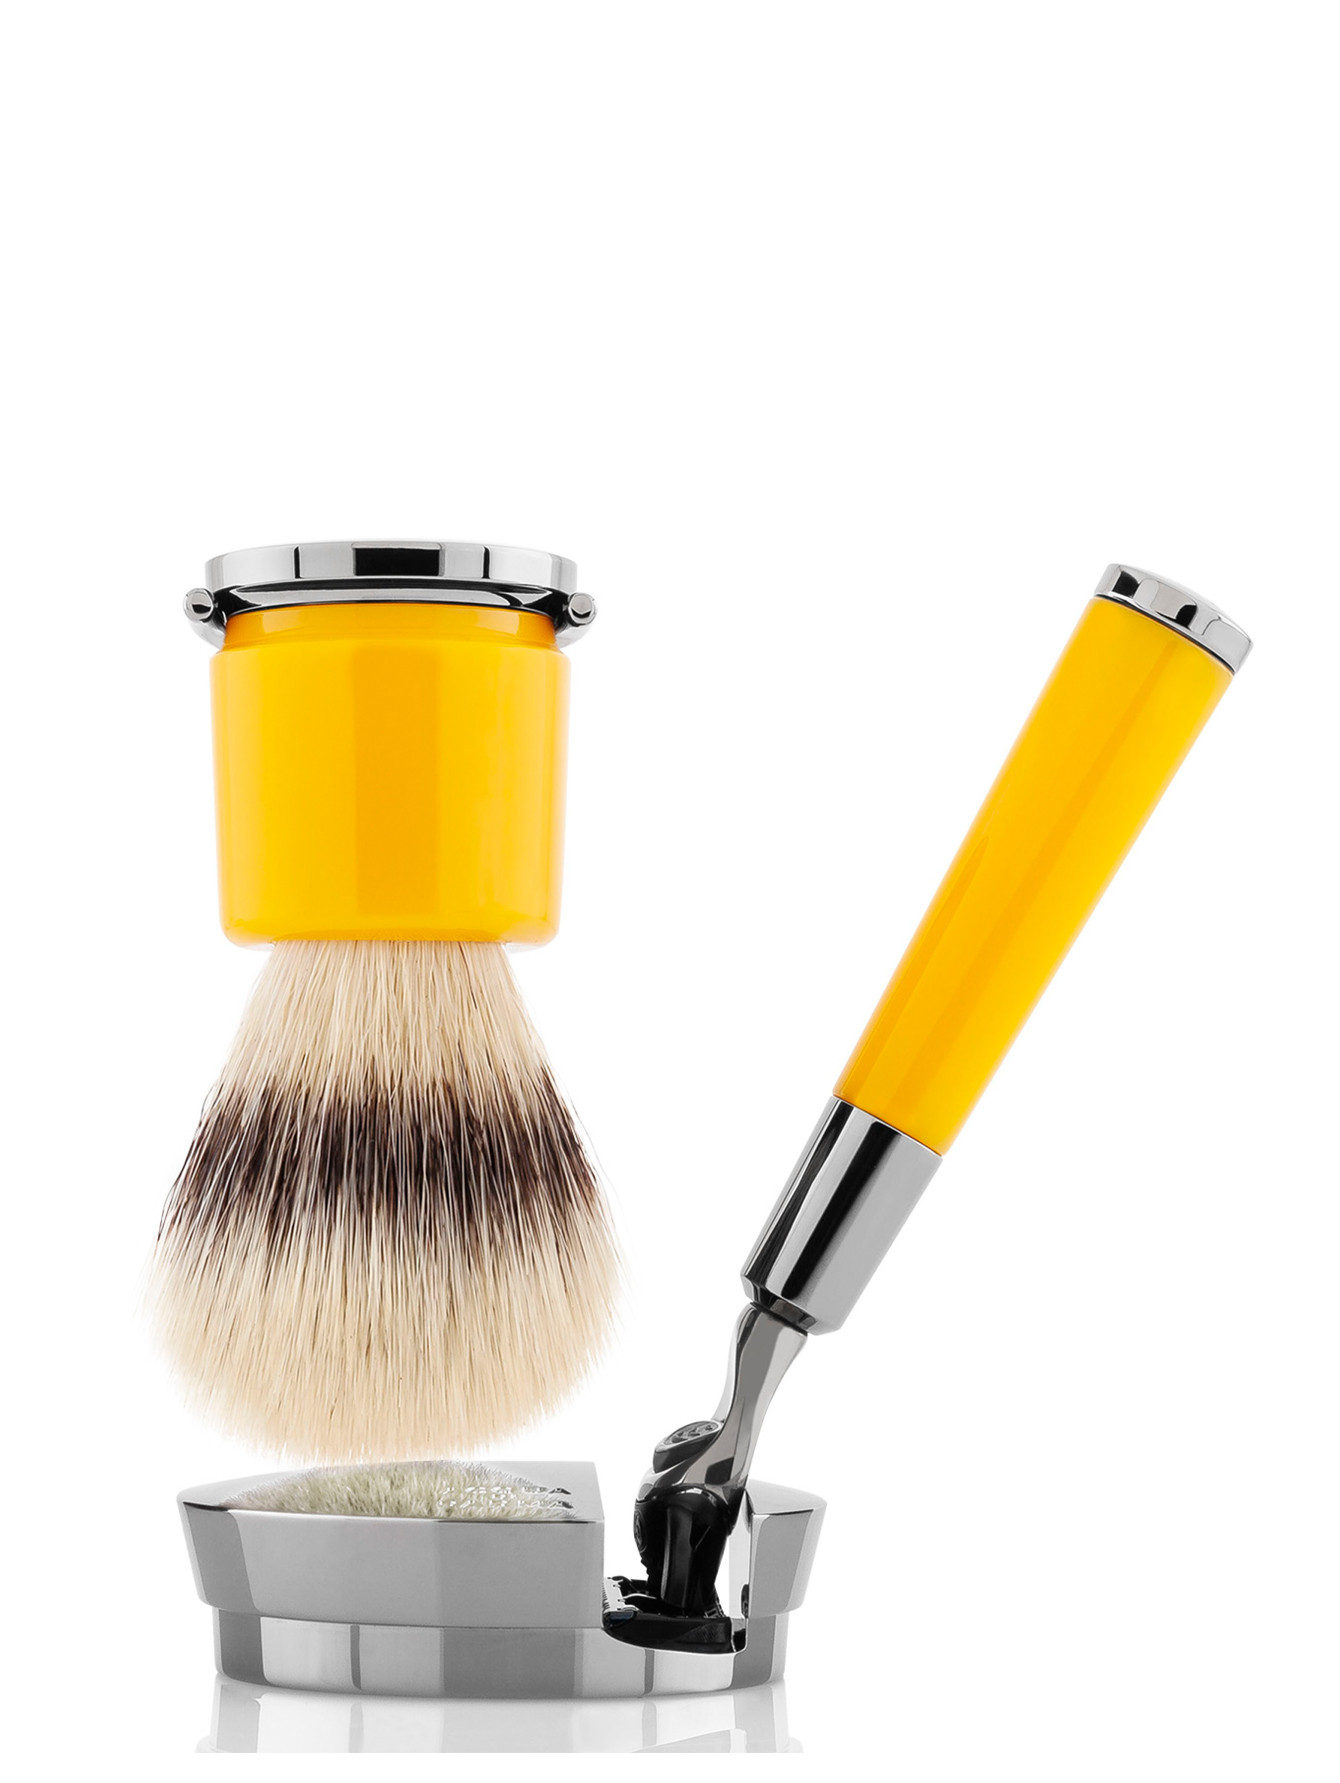 Станок и помазок для бритья желтый Barbiere - Общий вид